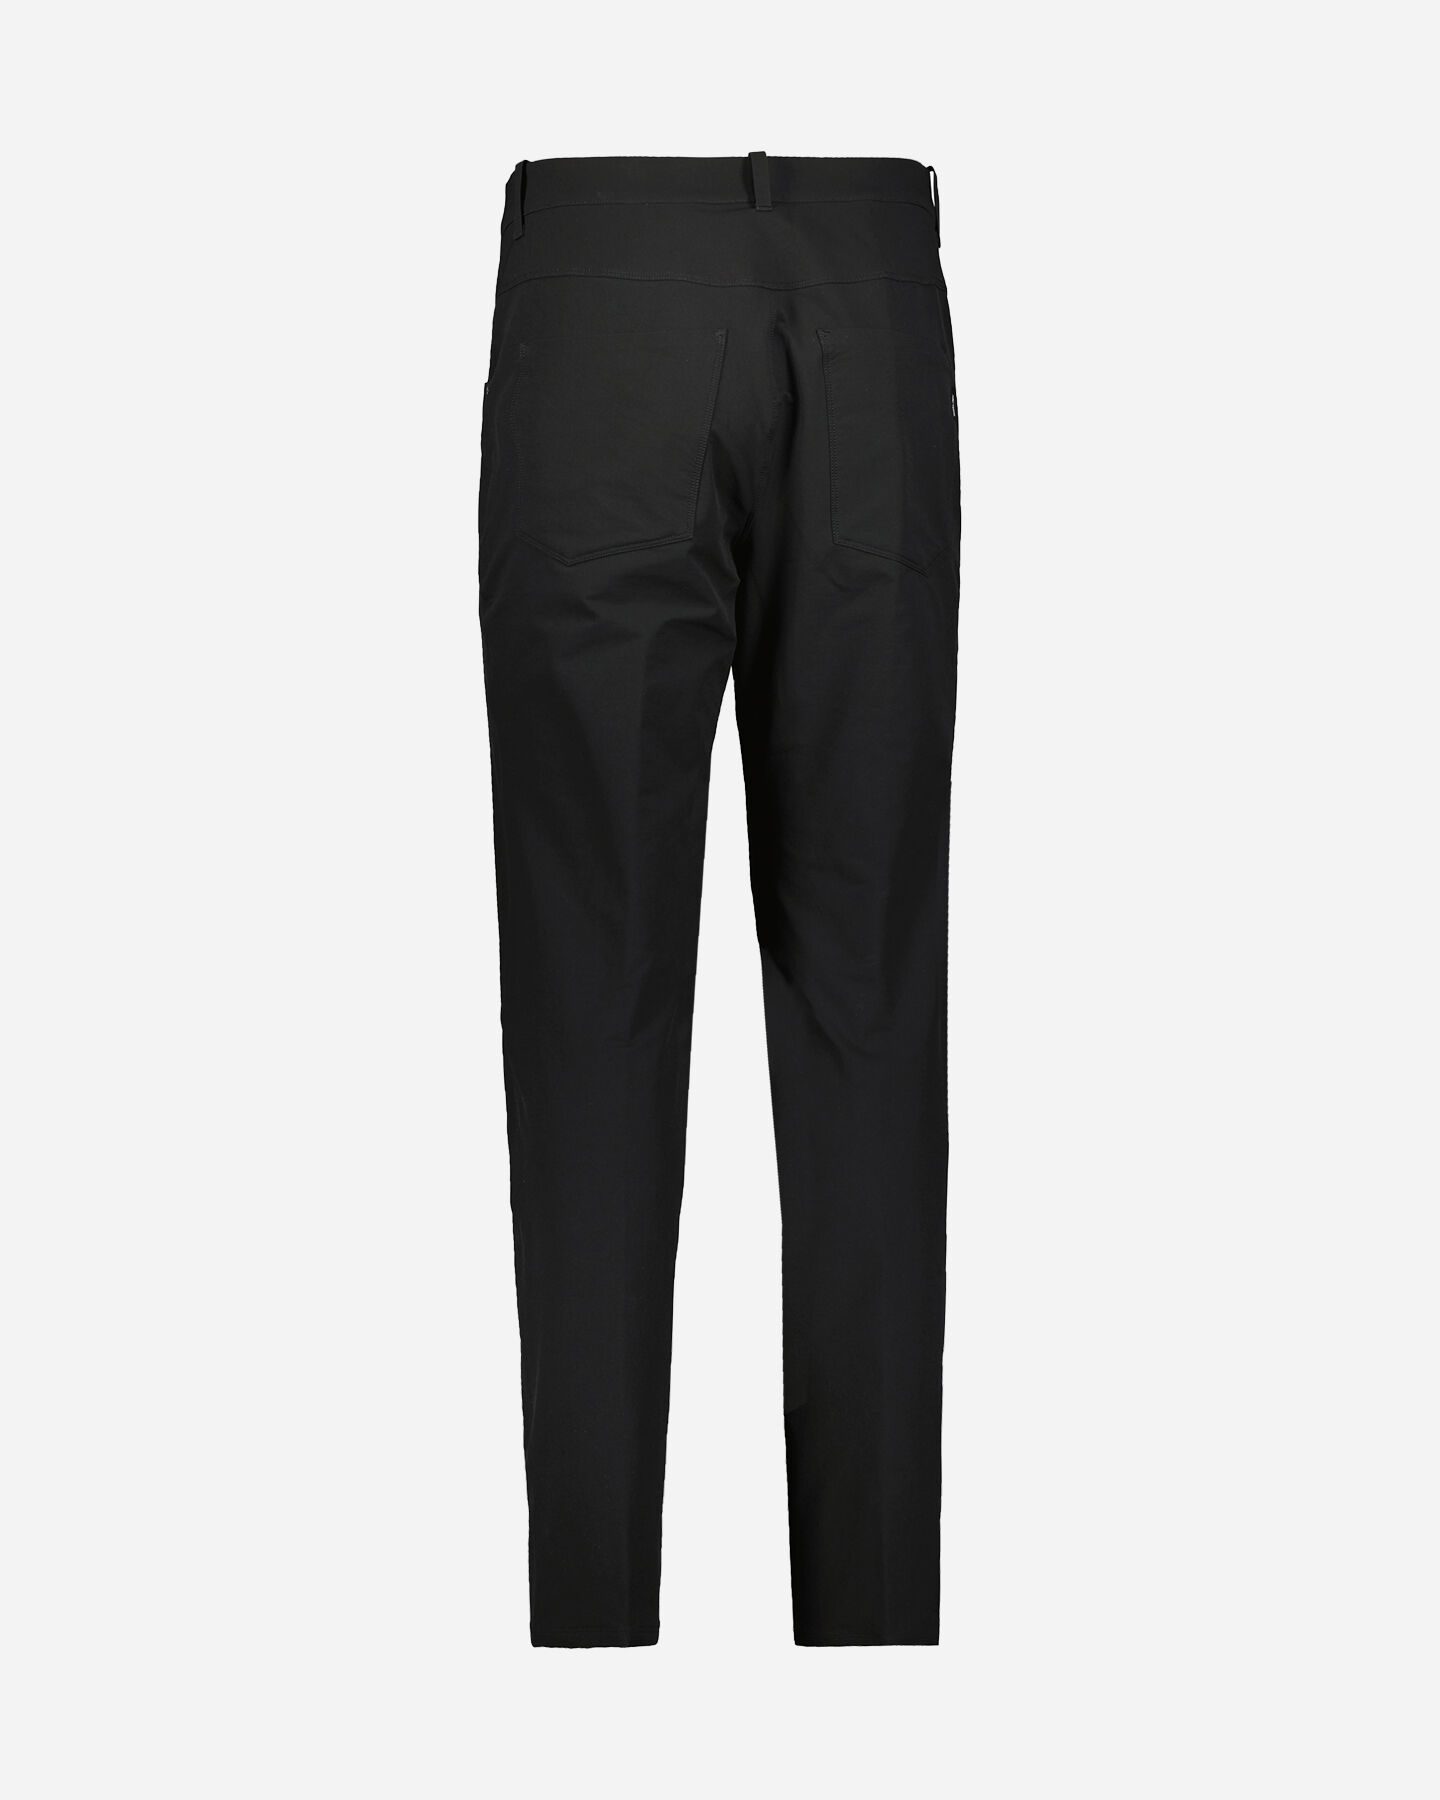  Pantalone outdoor ARC'TERYX LEVON M S4114882|1|34-R scatto 2